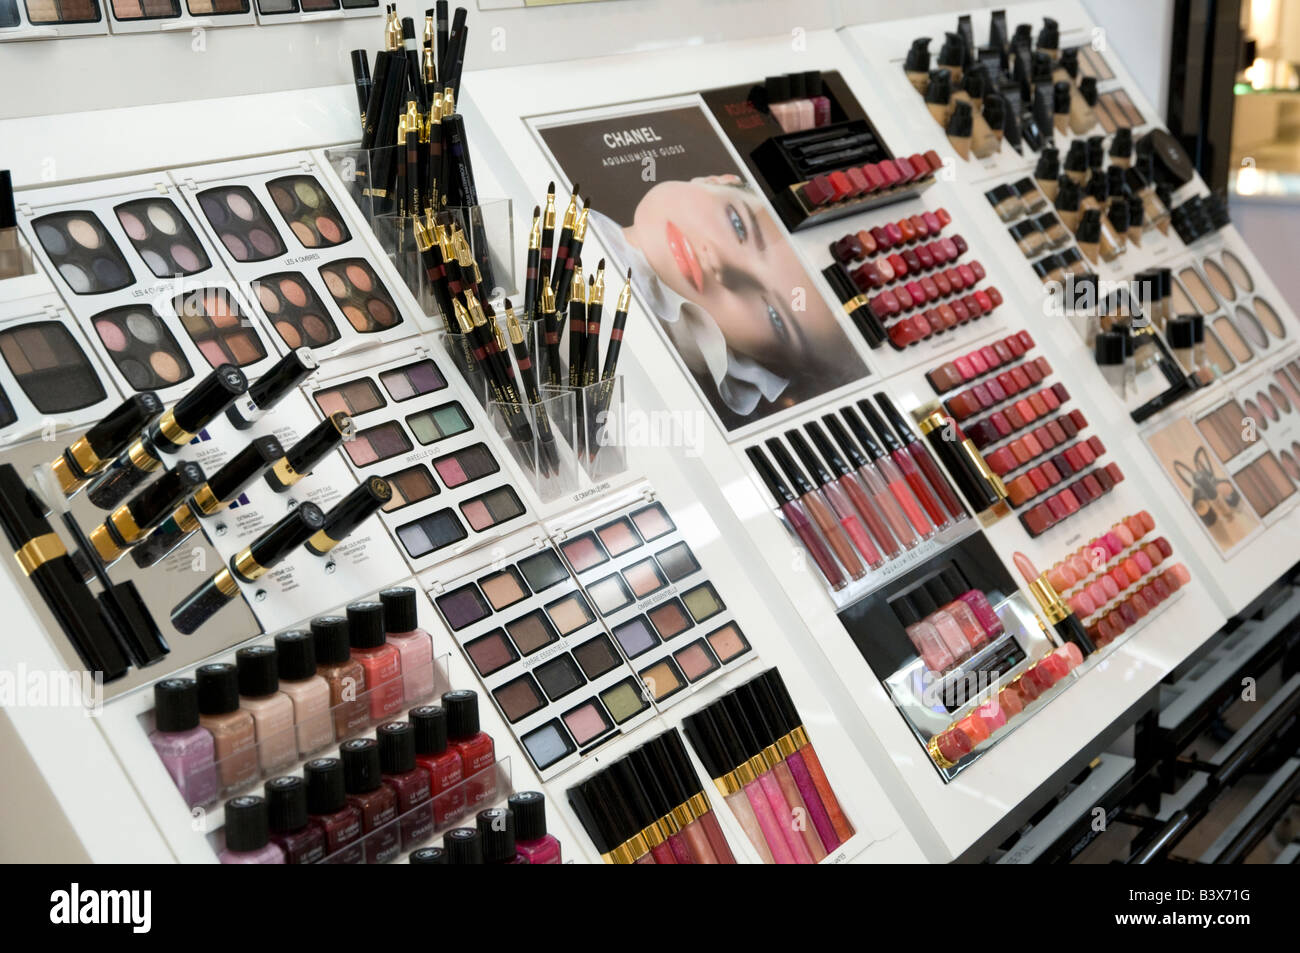 Chanel banco cosmetici Foto stock - Alamy